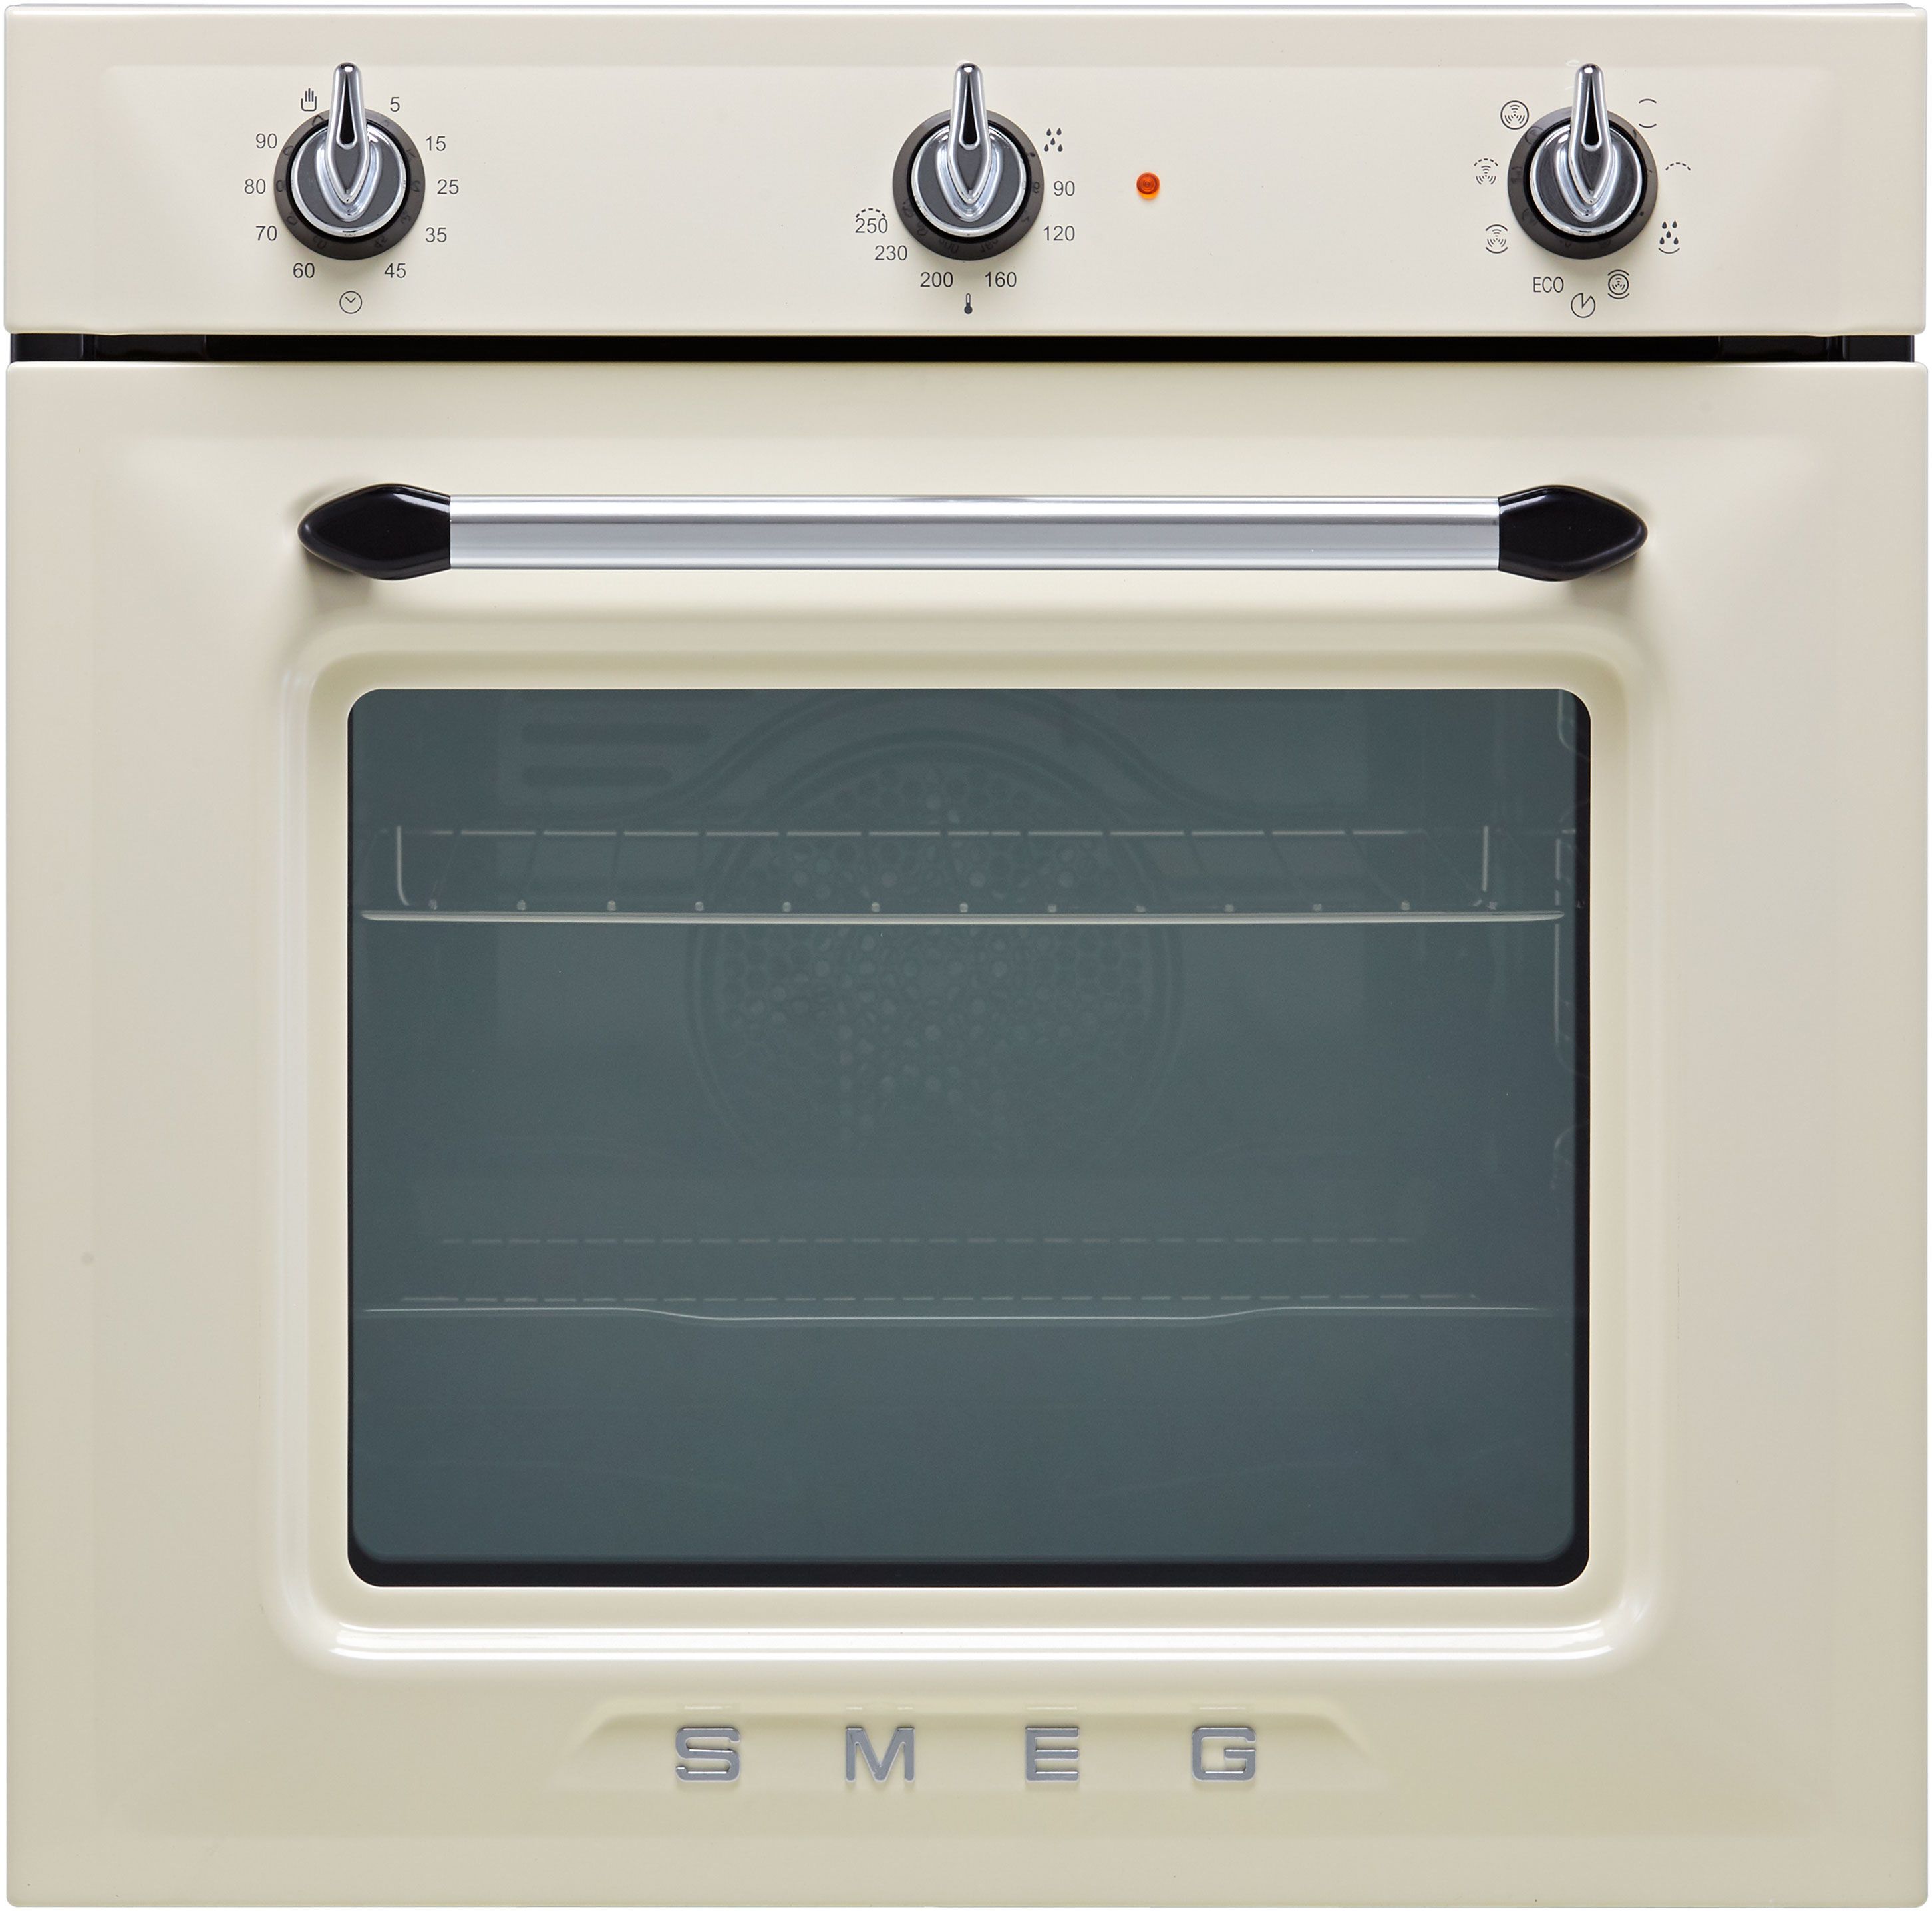 Smeg Victoria SF6905P1 Built In Electric Single Oven - Cream - A Rated, Cream